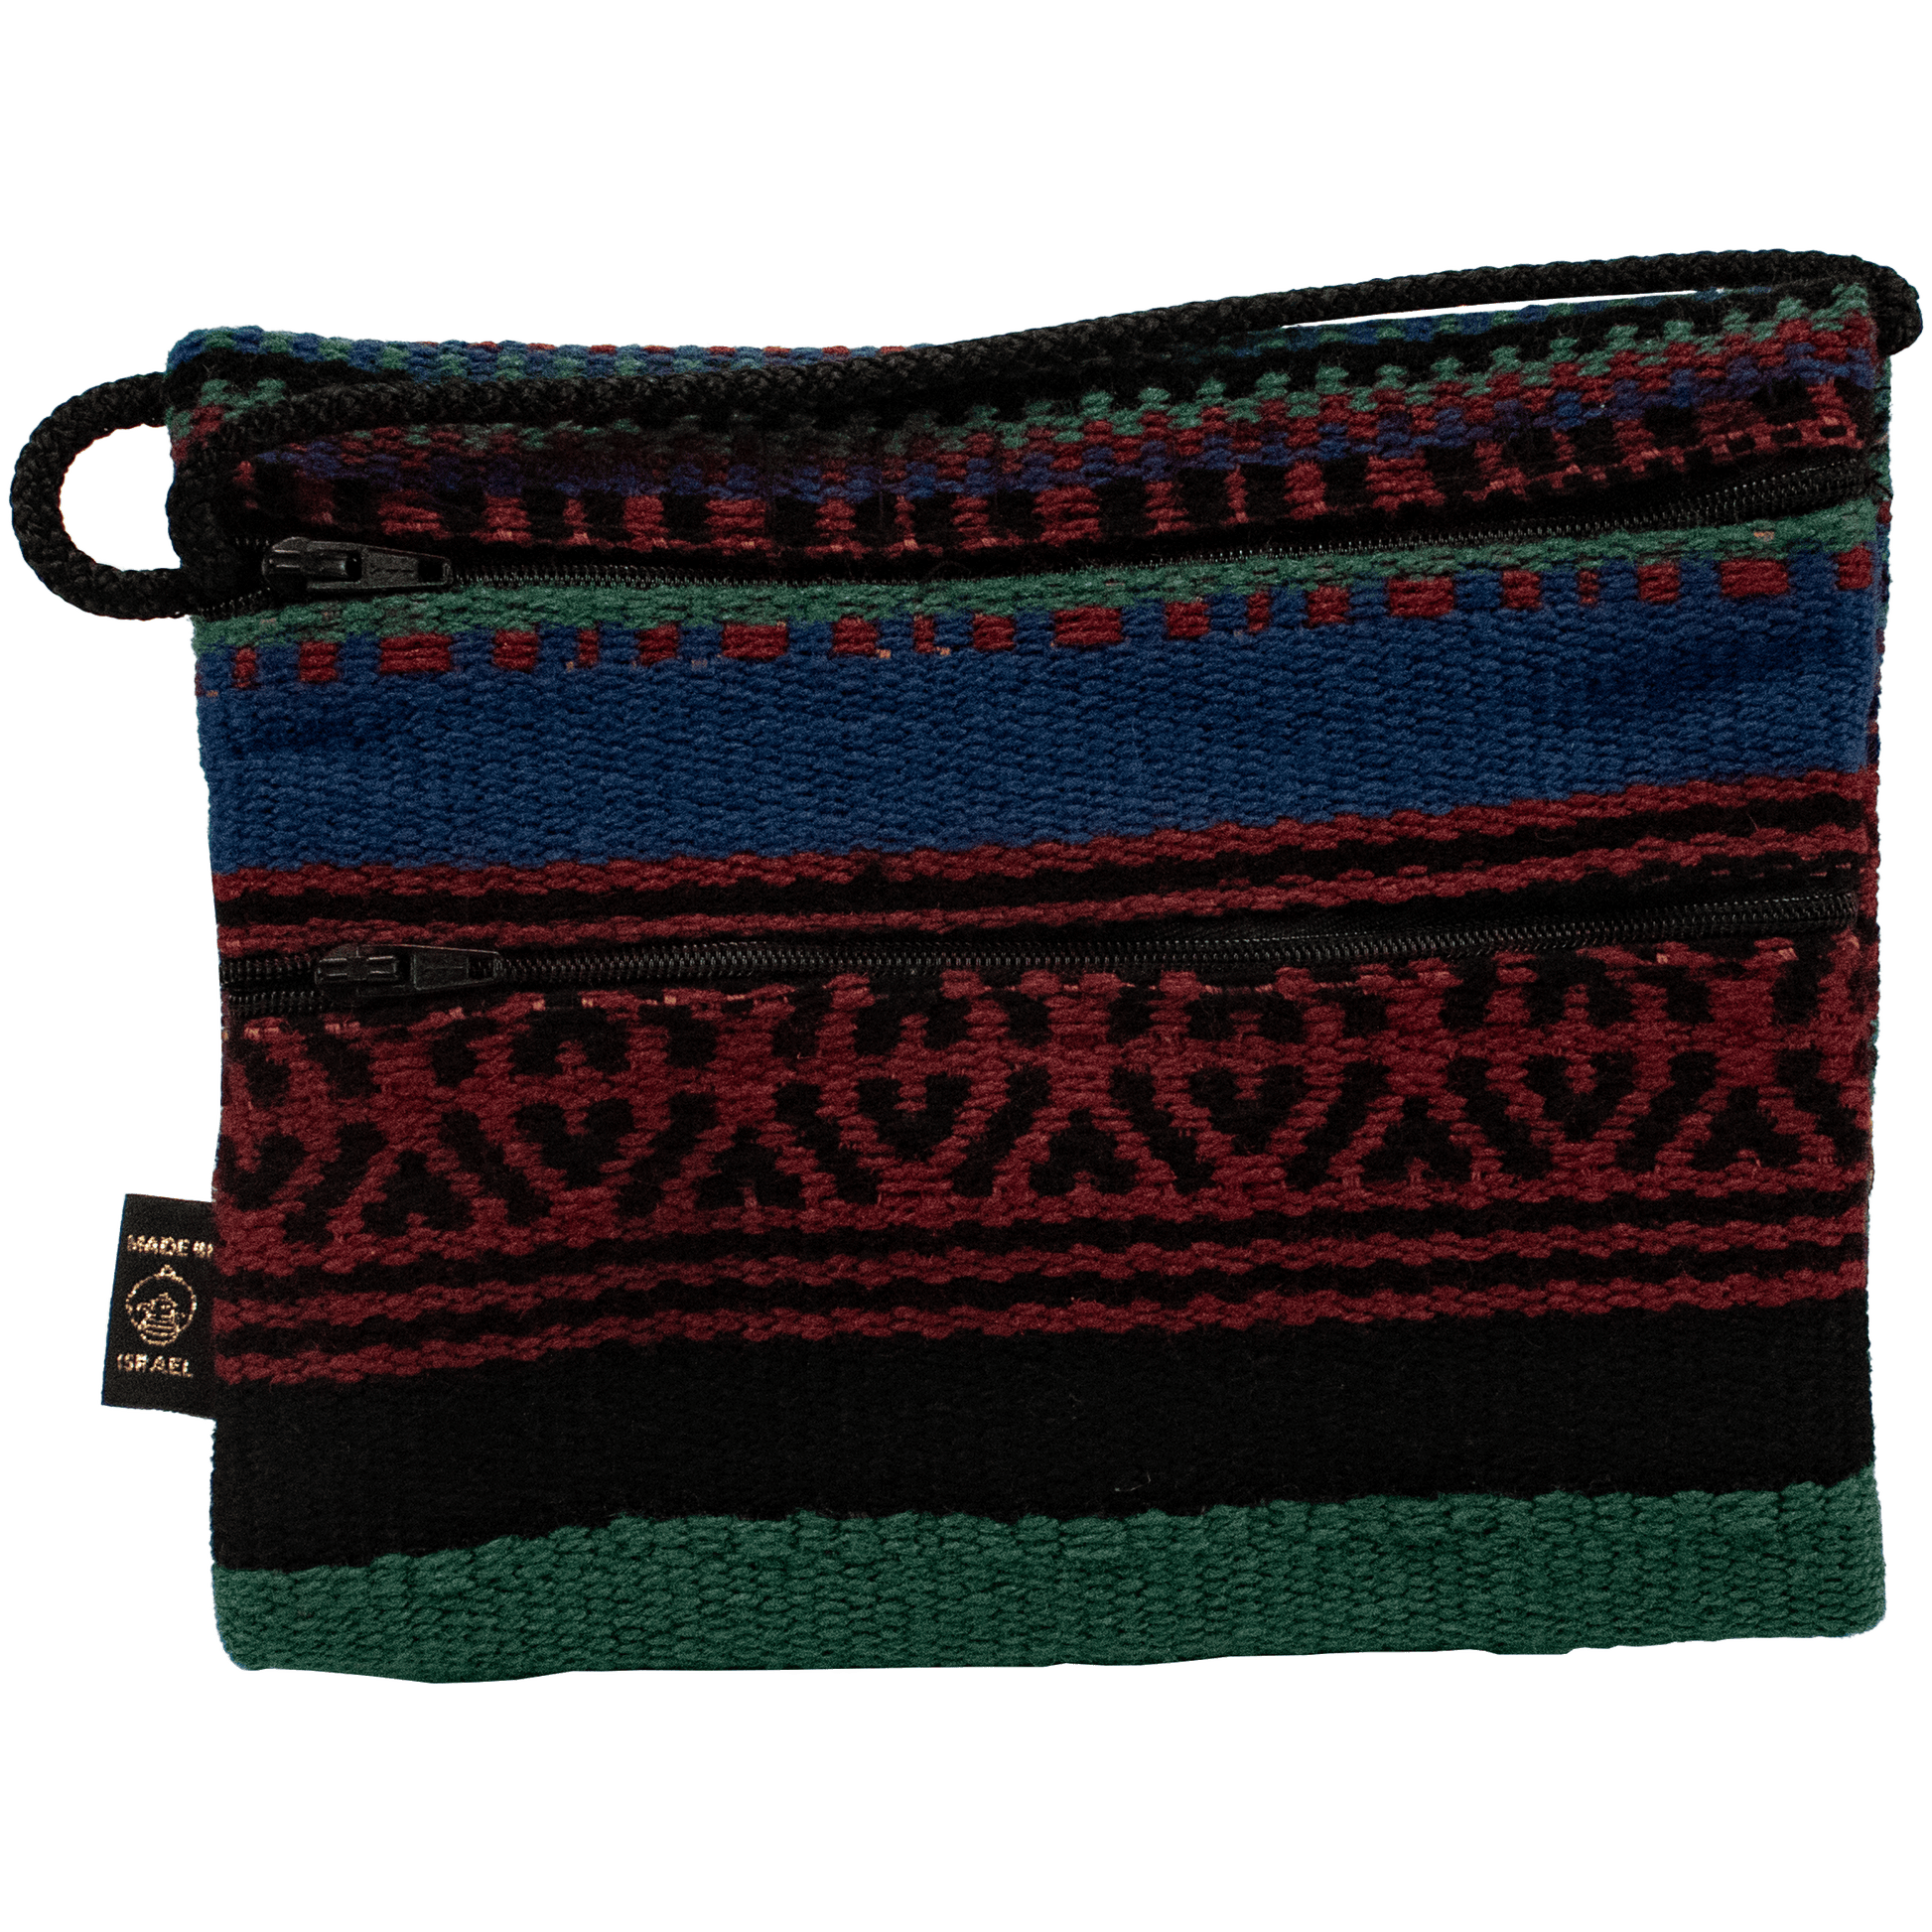 Double zipper horizontal crossbody bag Dark green red and blue tones